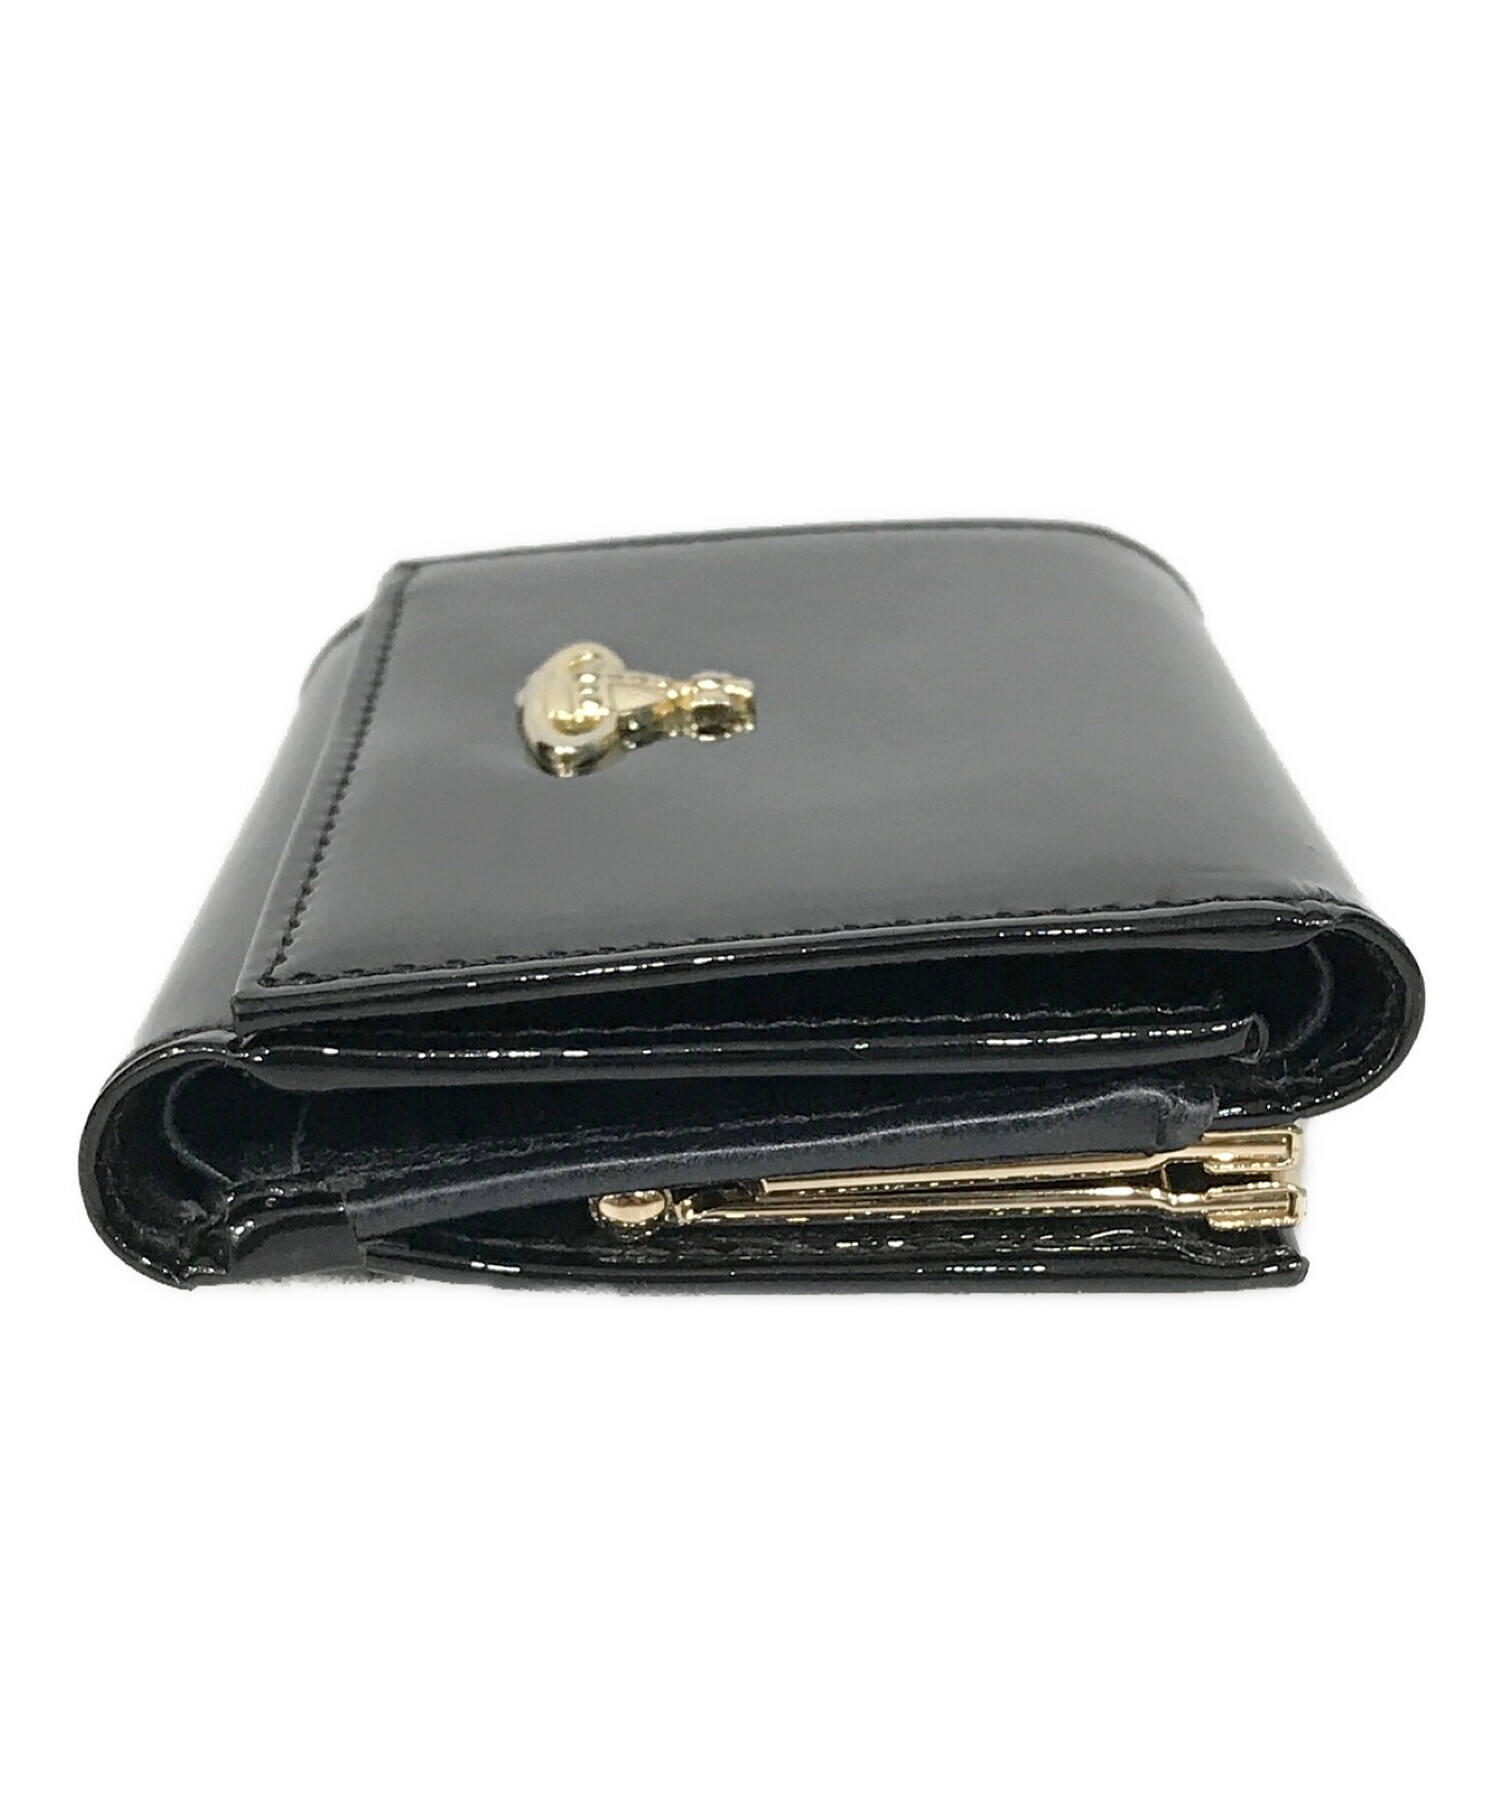 Vivienne Westwood (ヴィヴィアンウエストウッド) 3つ折りエナメル財布 ブラック